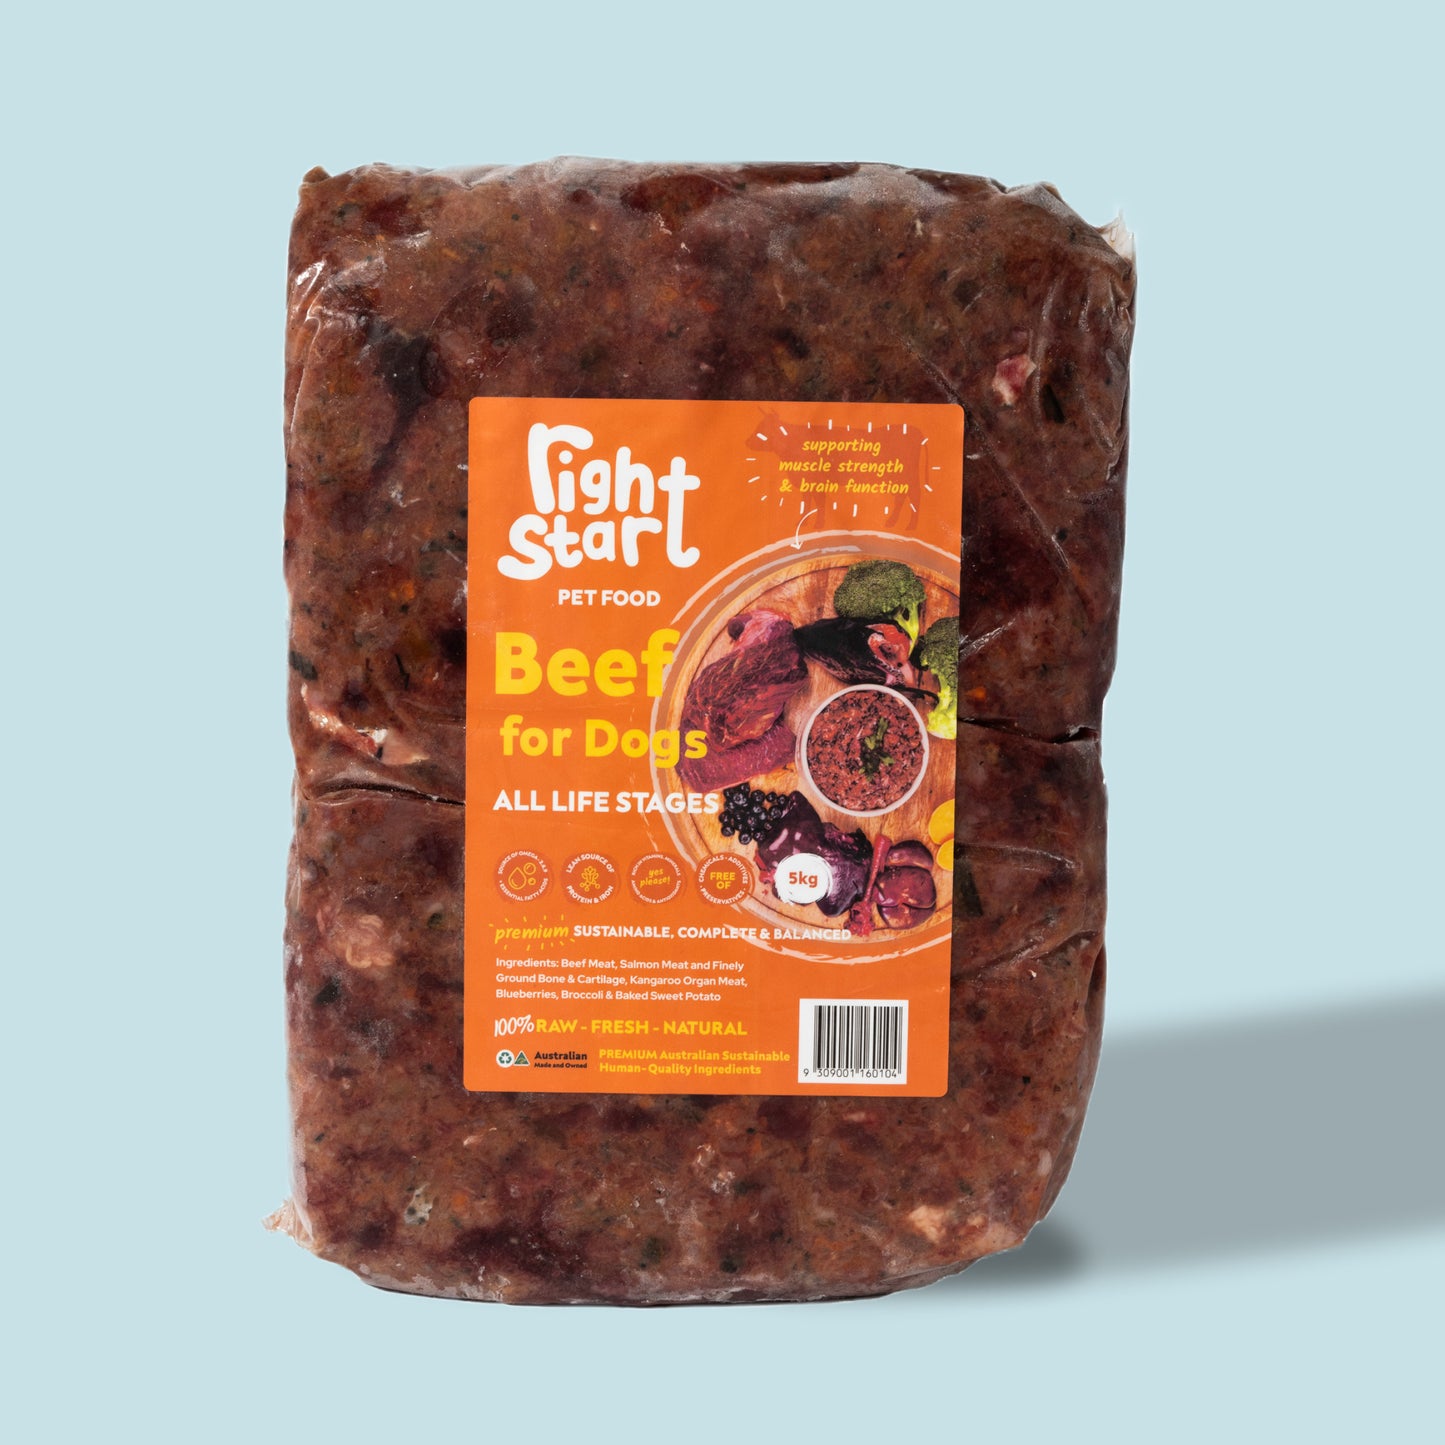 5kg slab of frozen beef mince for dogs orange sticker